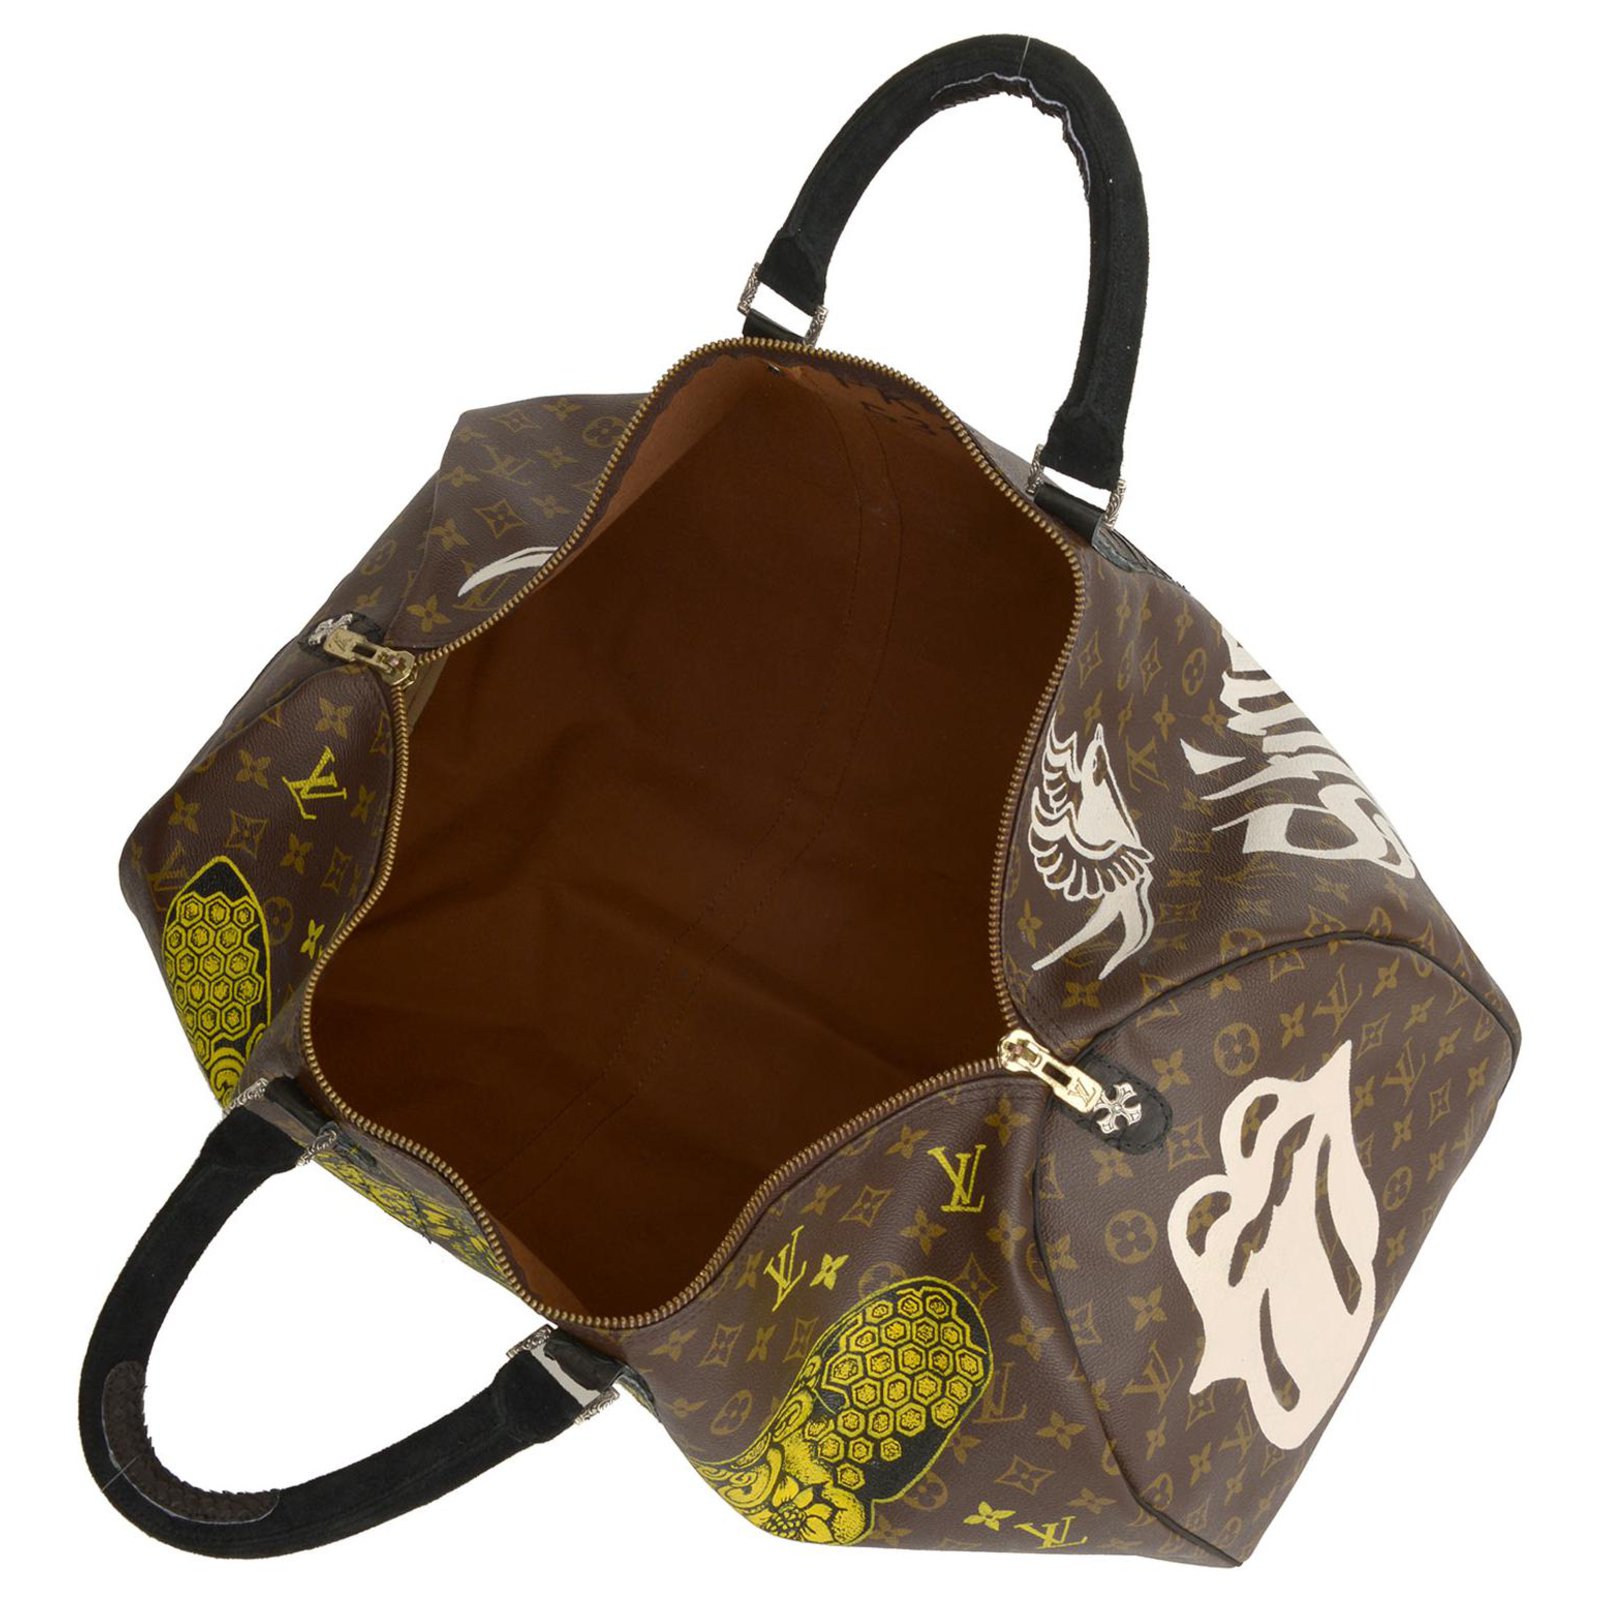 LV Speedy Pluto of Philip Karto - Louis Vuitton customized bag